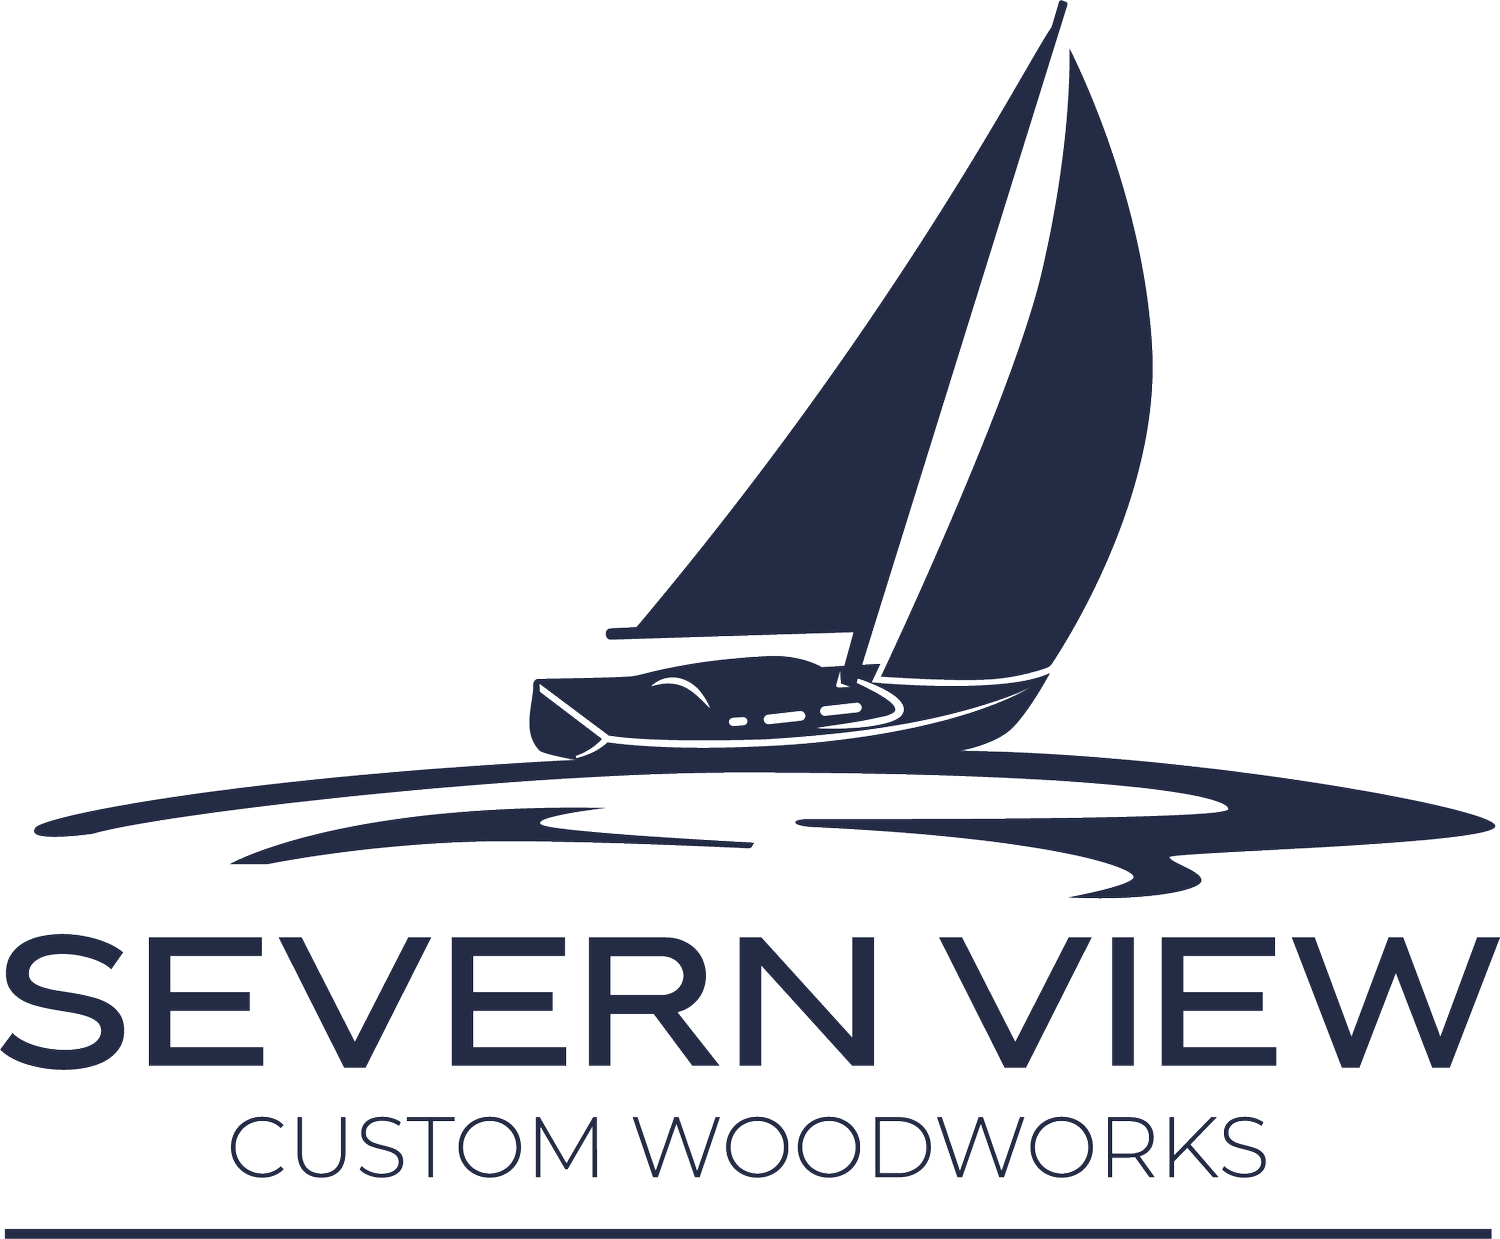 Severn View Custom Woodworks